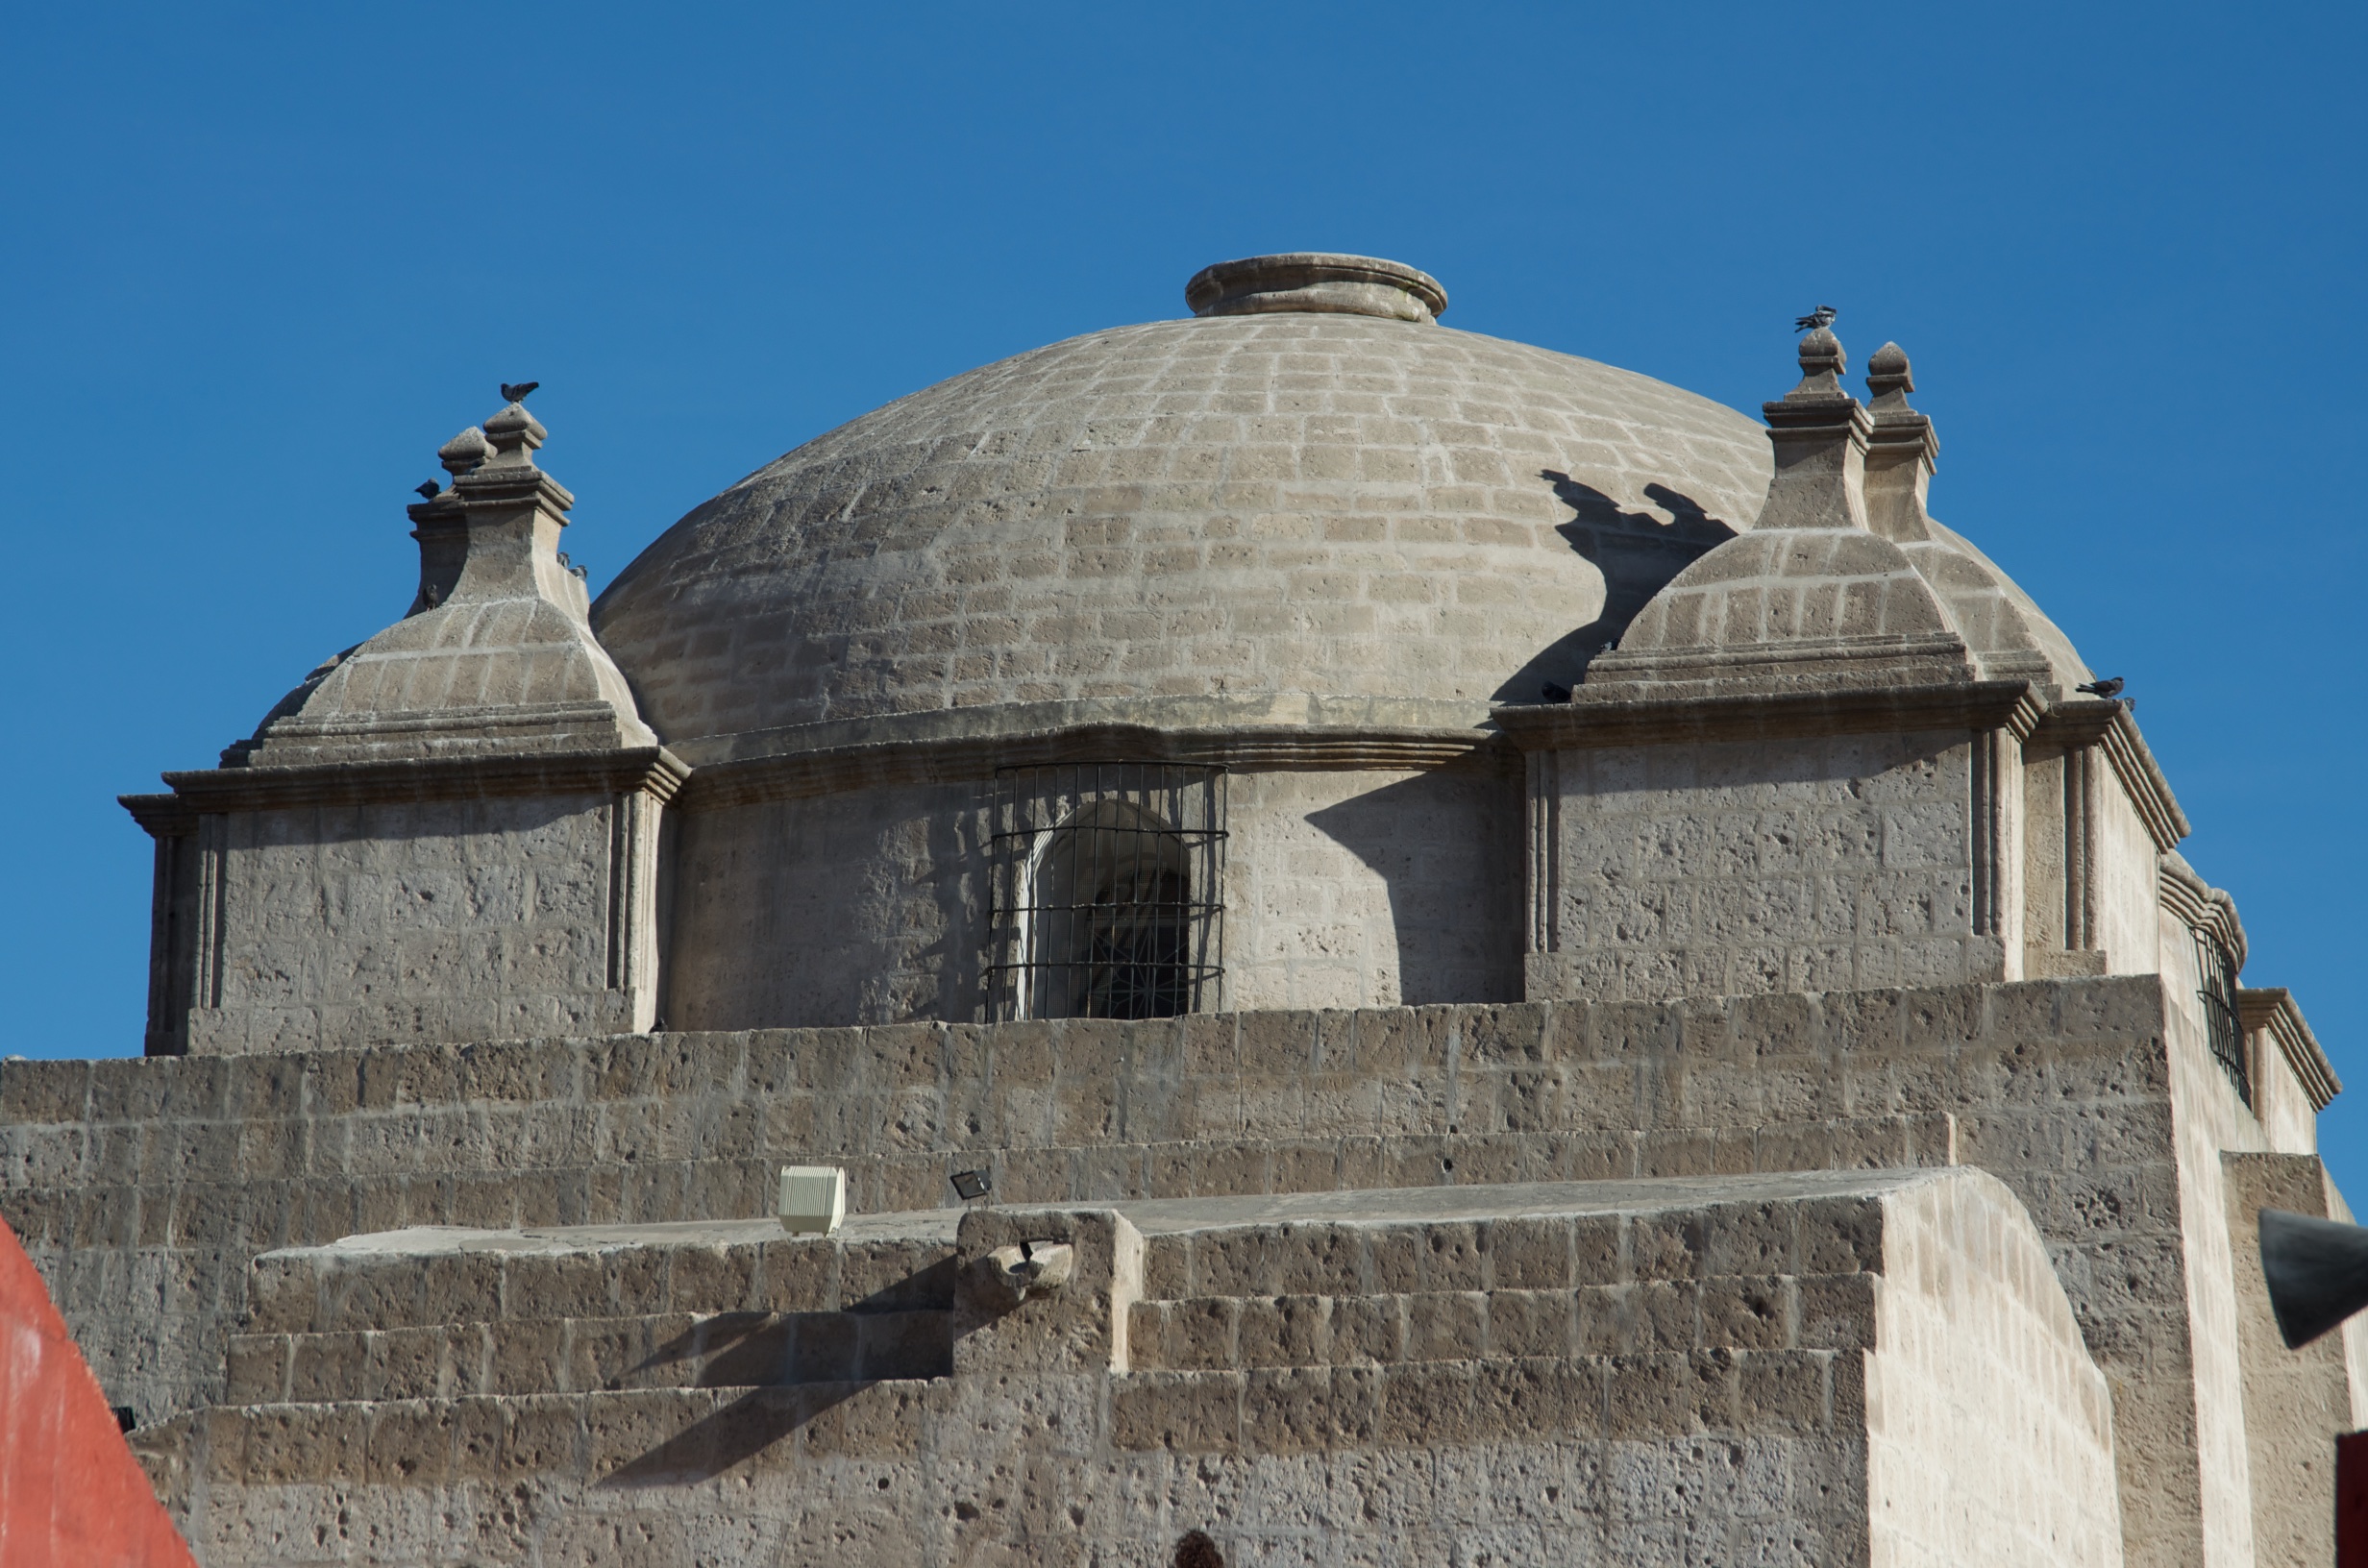  Dome, Santa Catalina Convent, Arequipa, Peru 